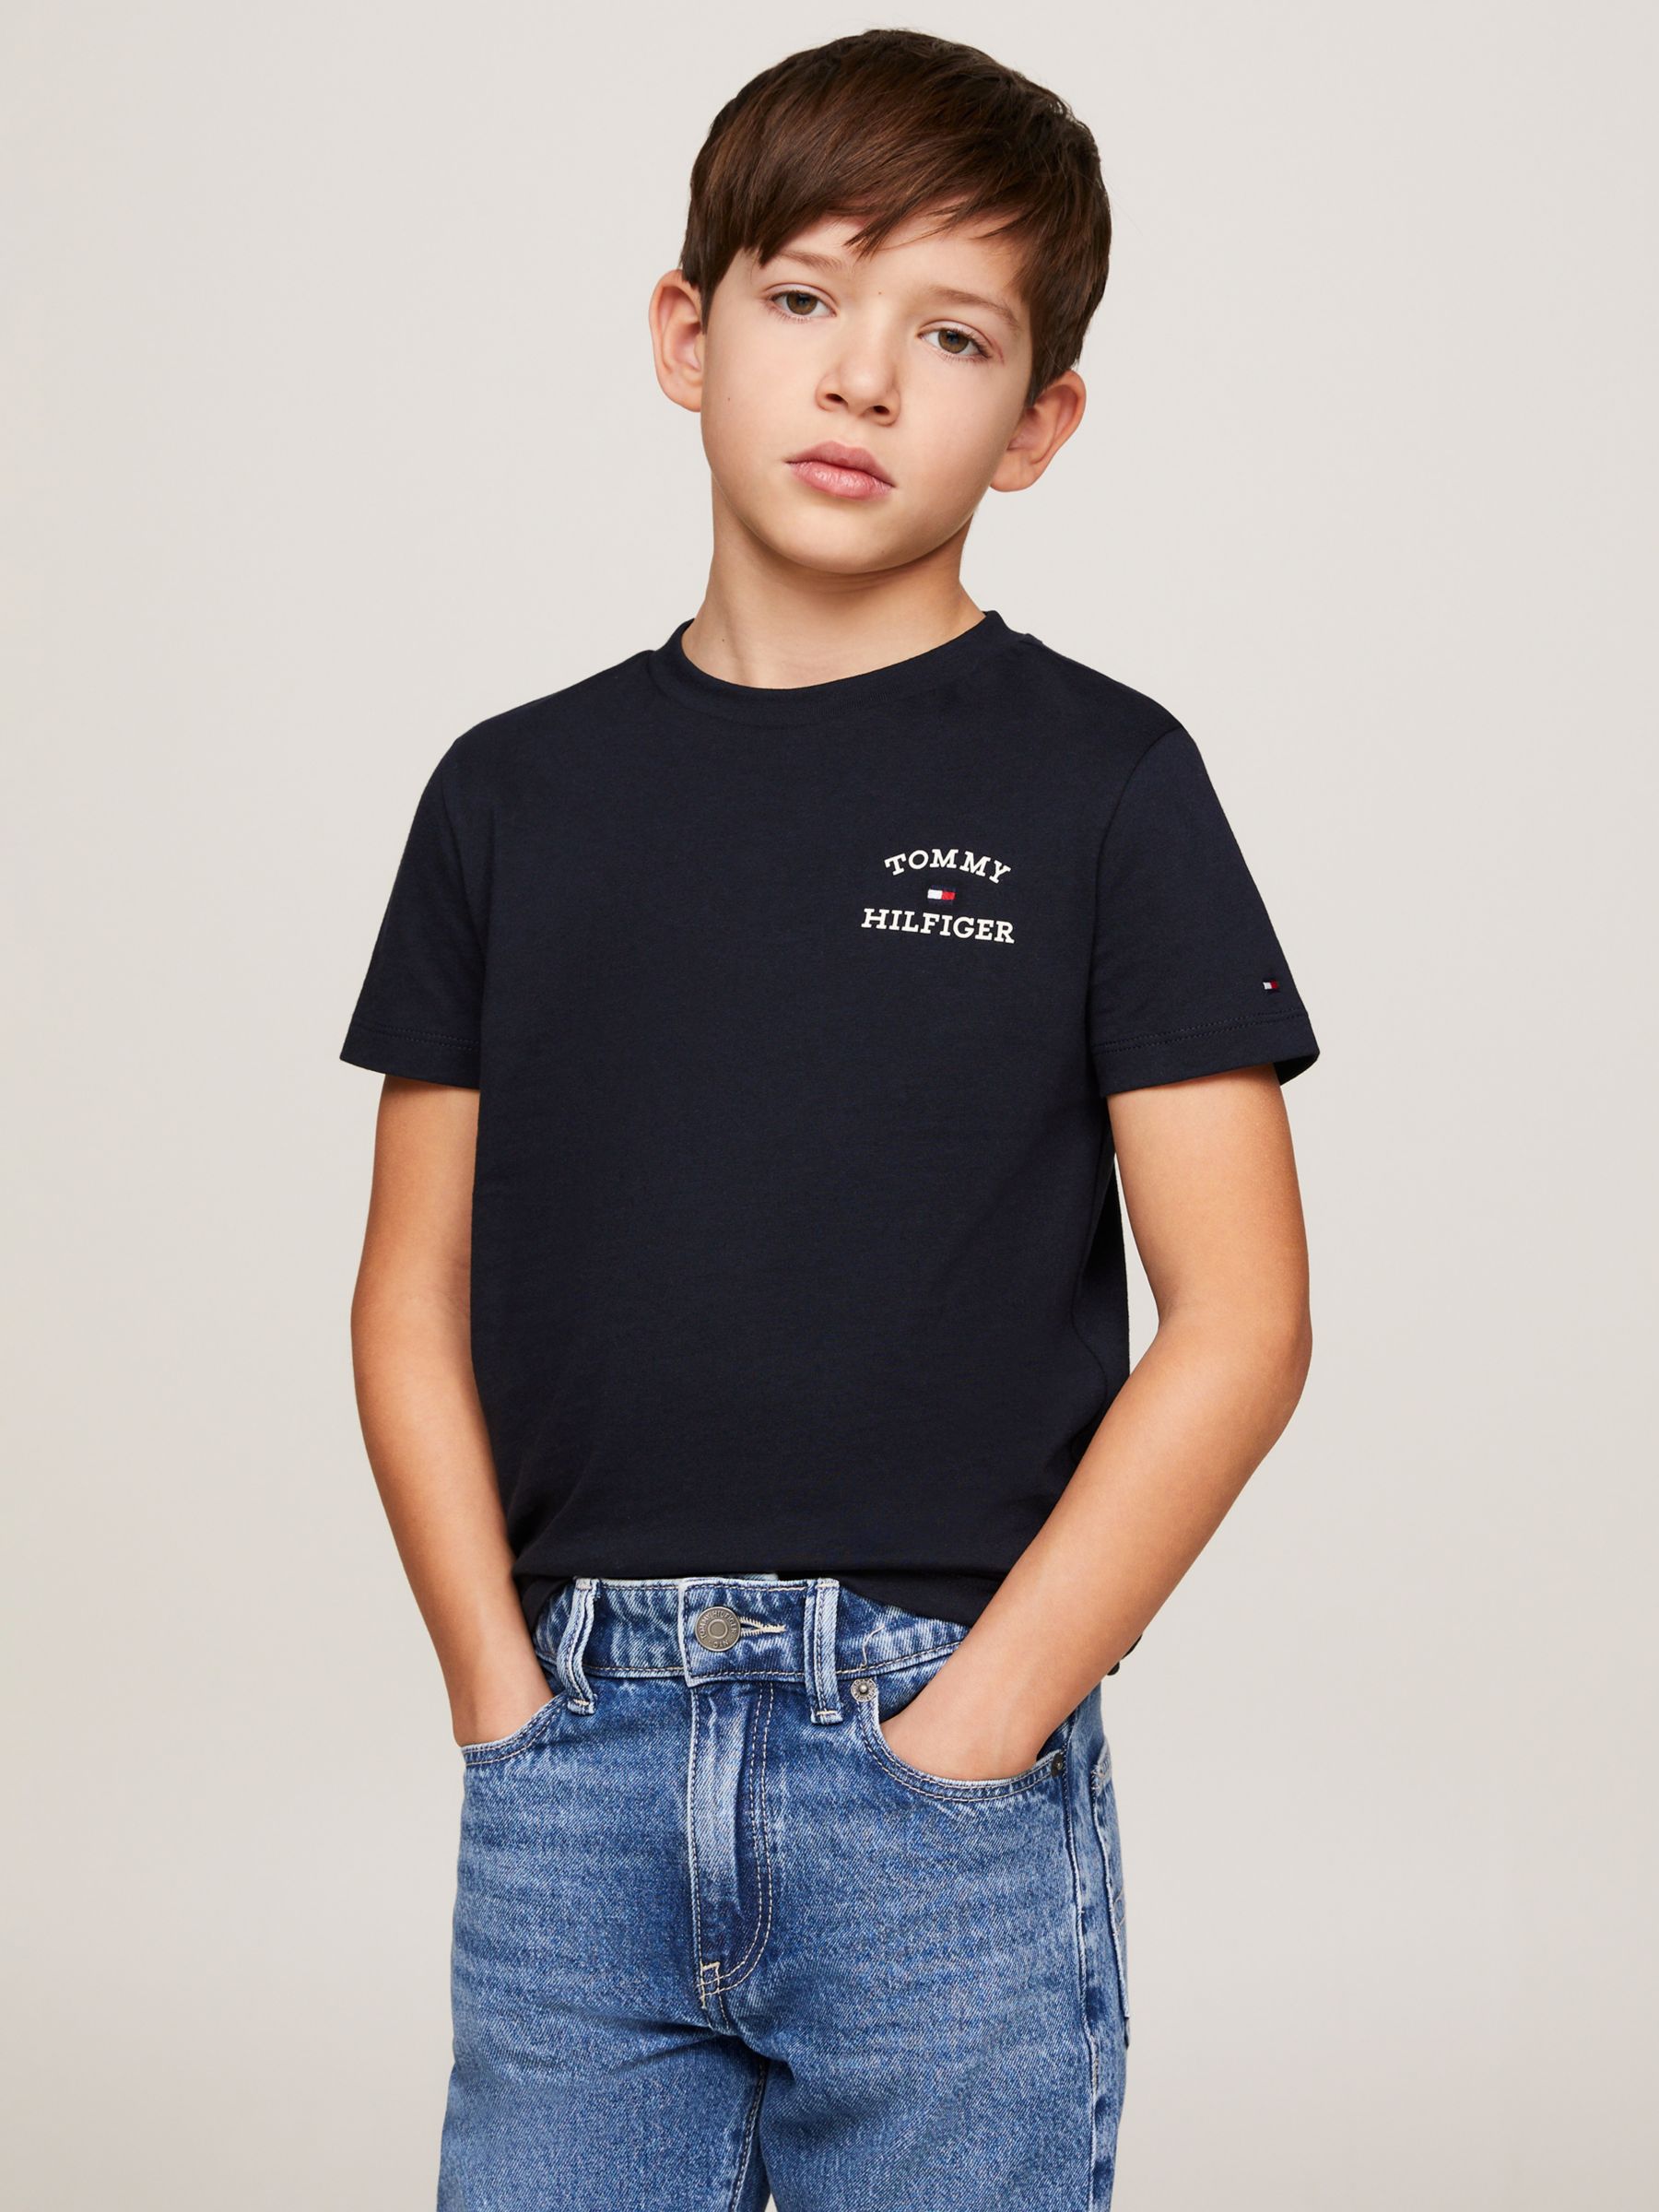 Tommy Hilfiger Kids' Chest Logo T-Shirt, Desert Sky, 10 years